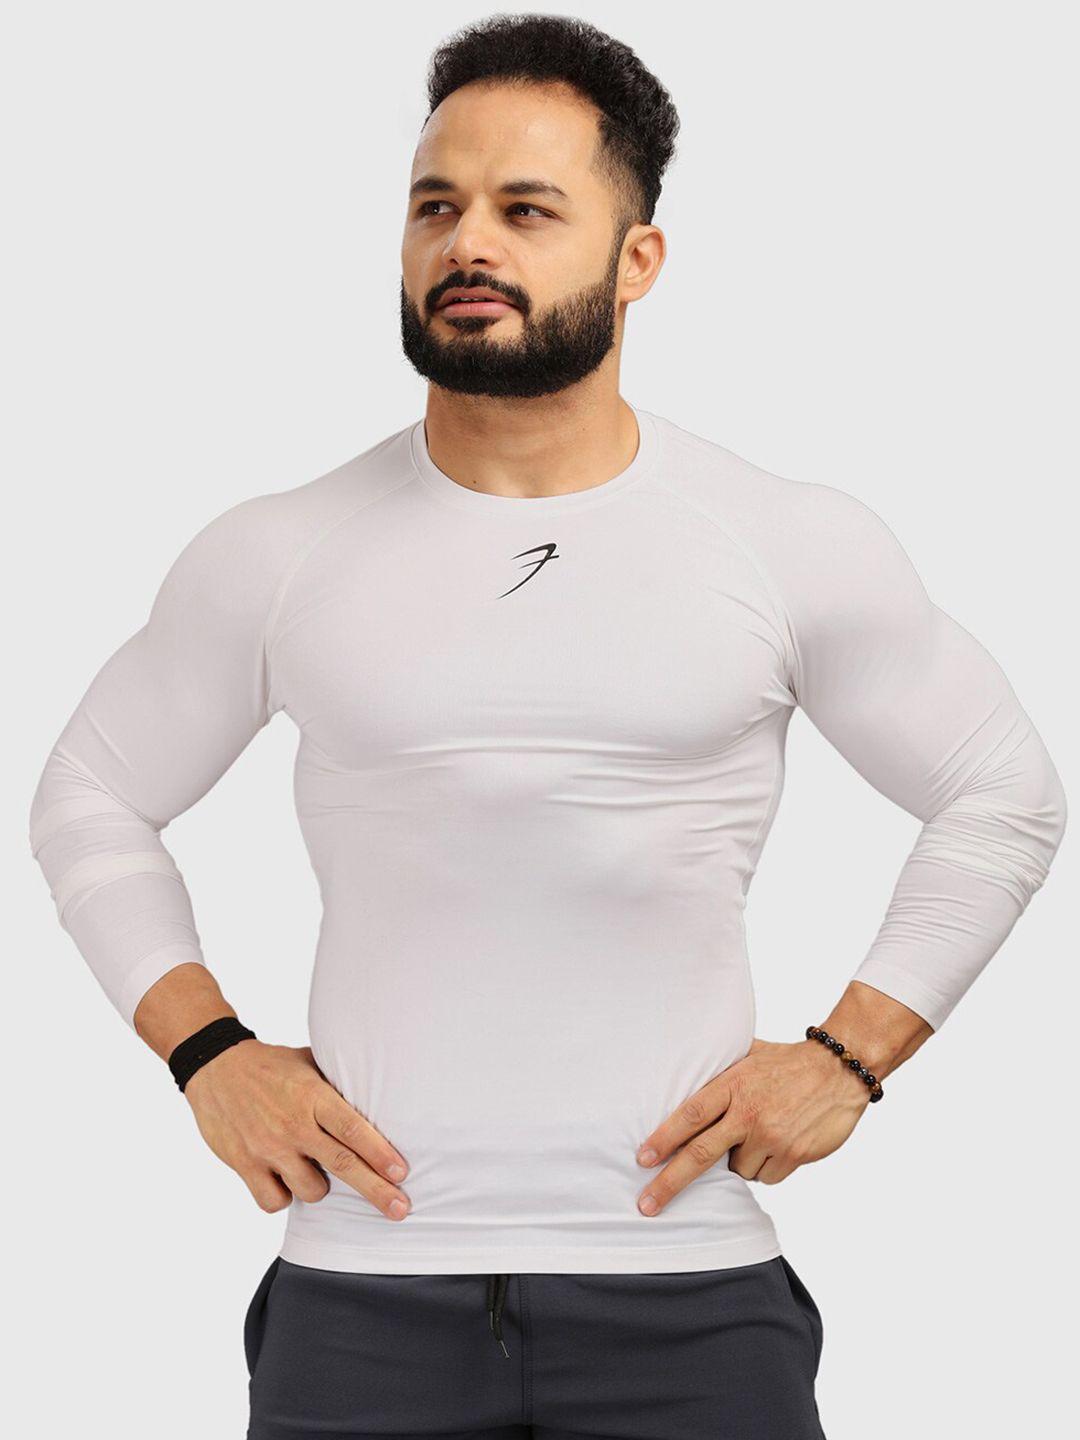 fuaark-men-white-henley-neck-compression-t-shirt